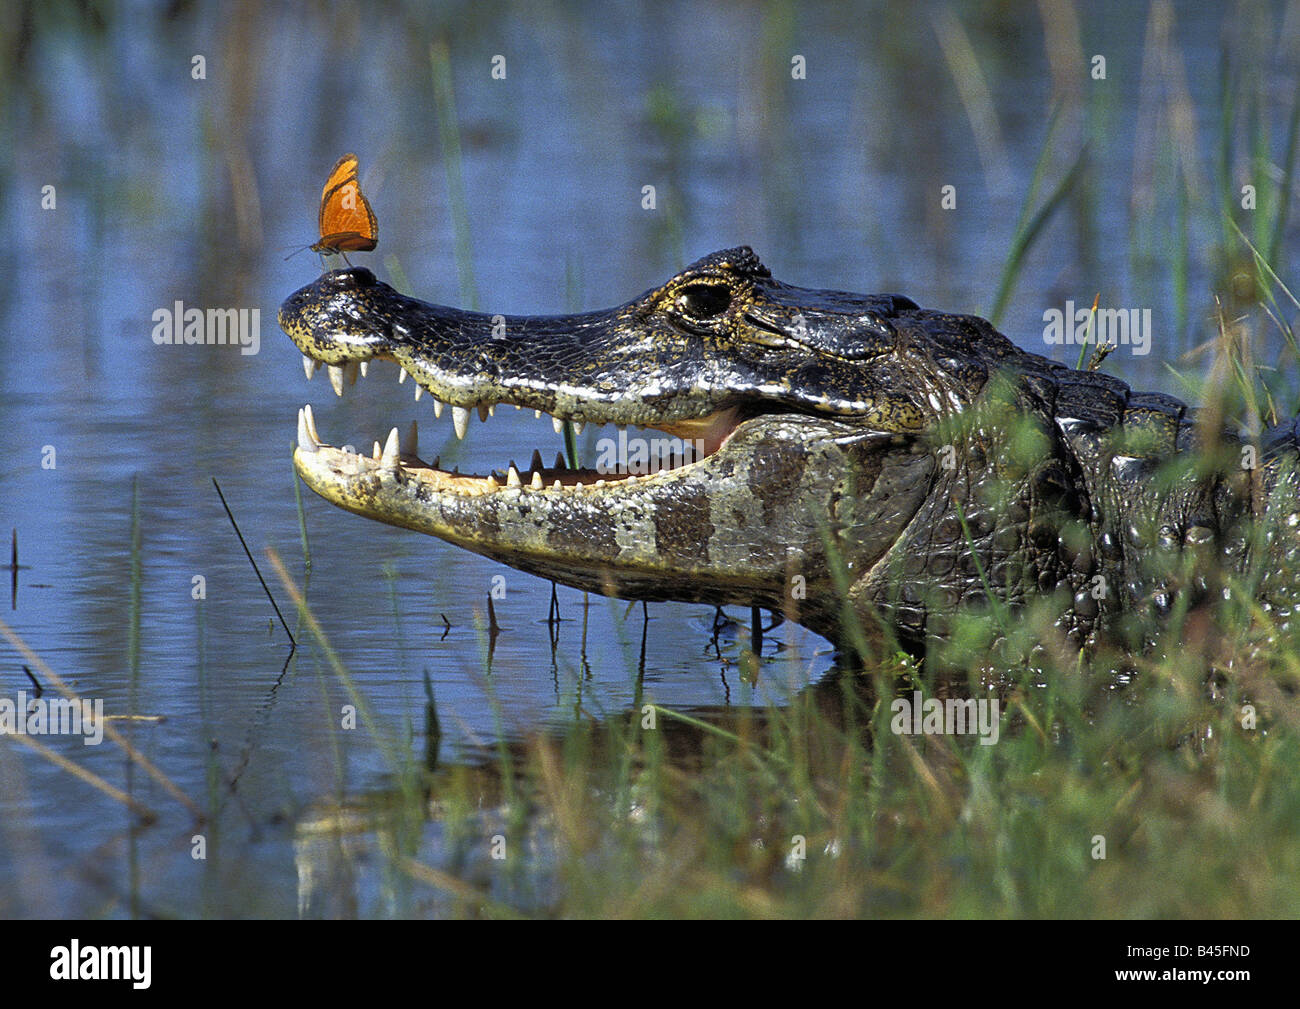 Zoología / animales, reptiles, cocodrilos, caimanes (Caiman crocodilus yacare), con flambeau, Pantanal, Brasil, distribución: Sudamérica, Additional-Rights-Clearance-Info-Not-Available Foto de stock